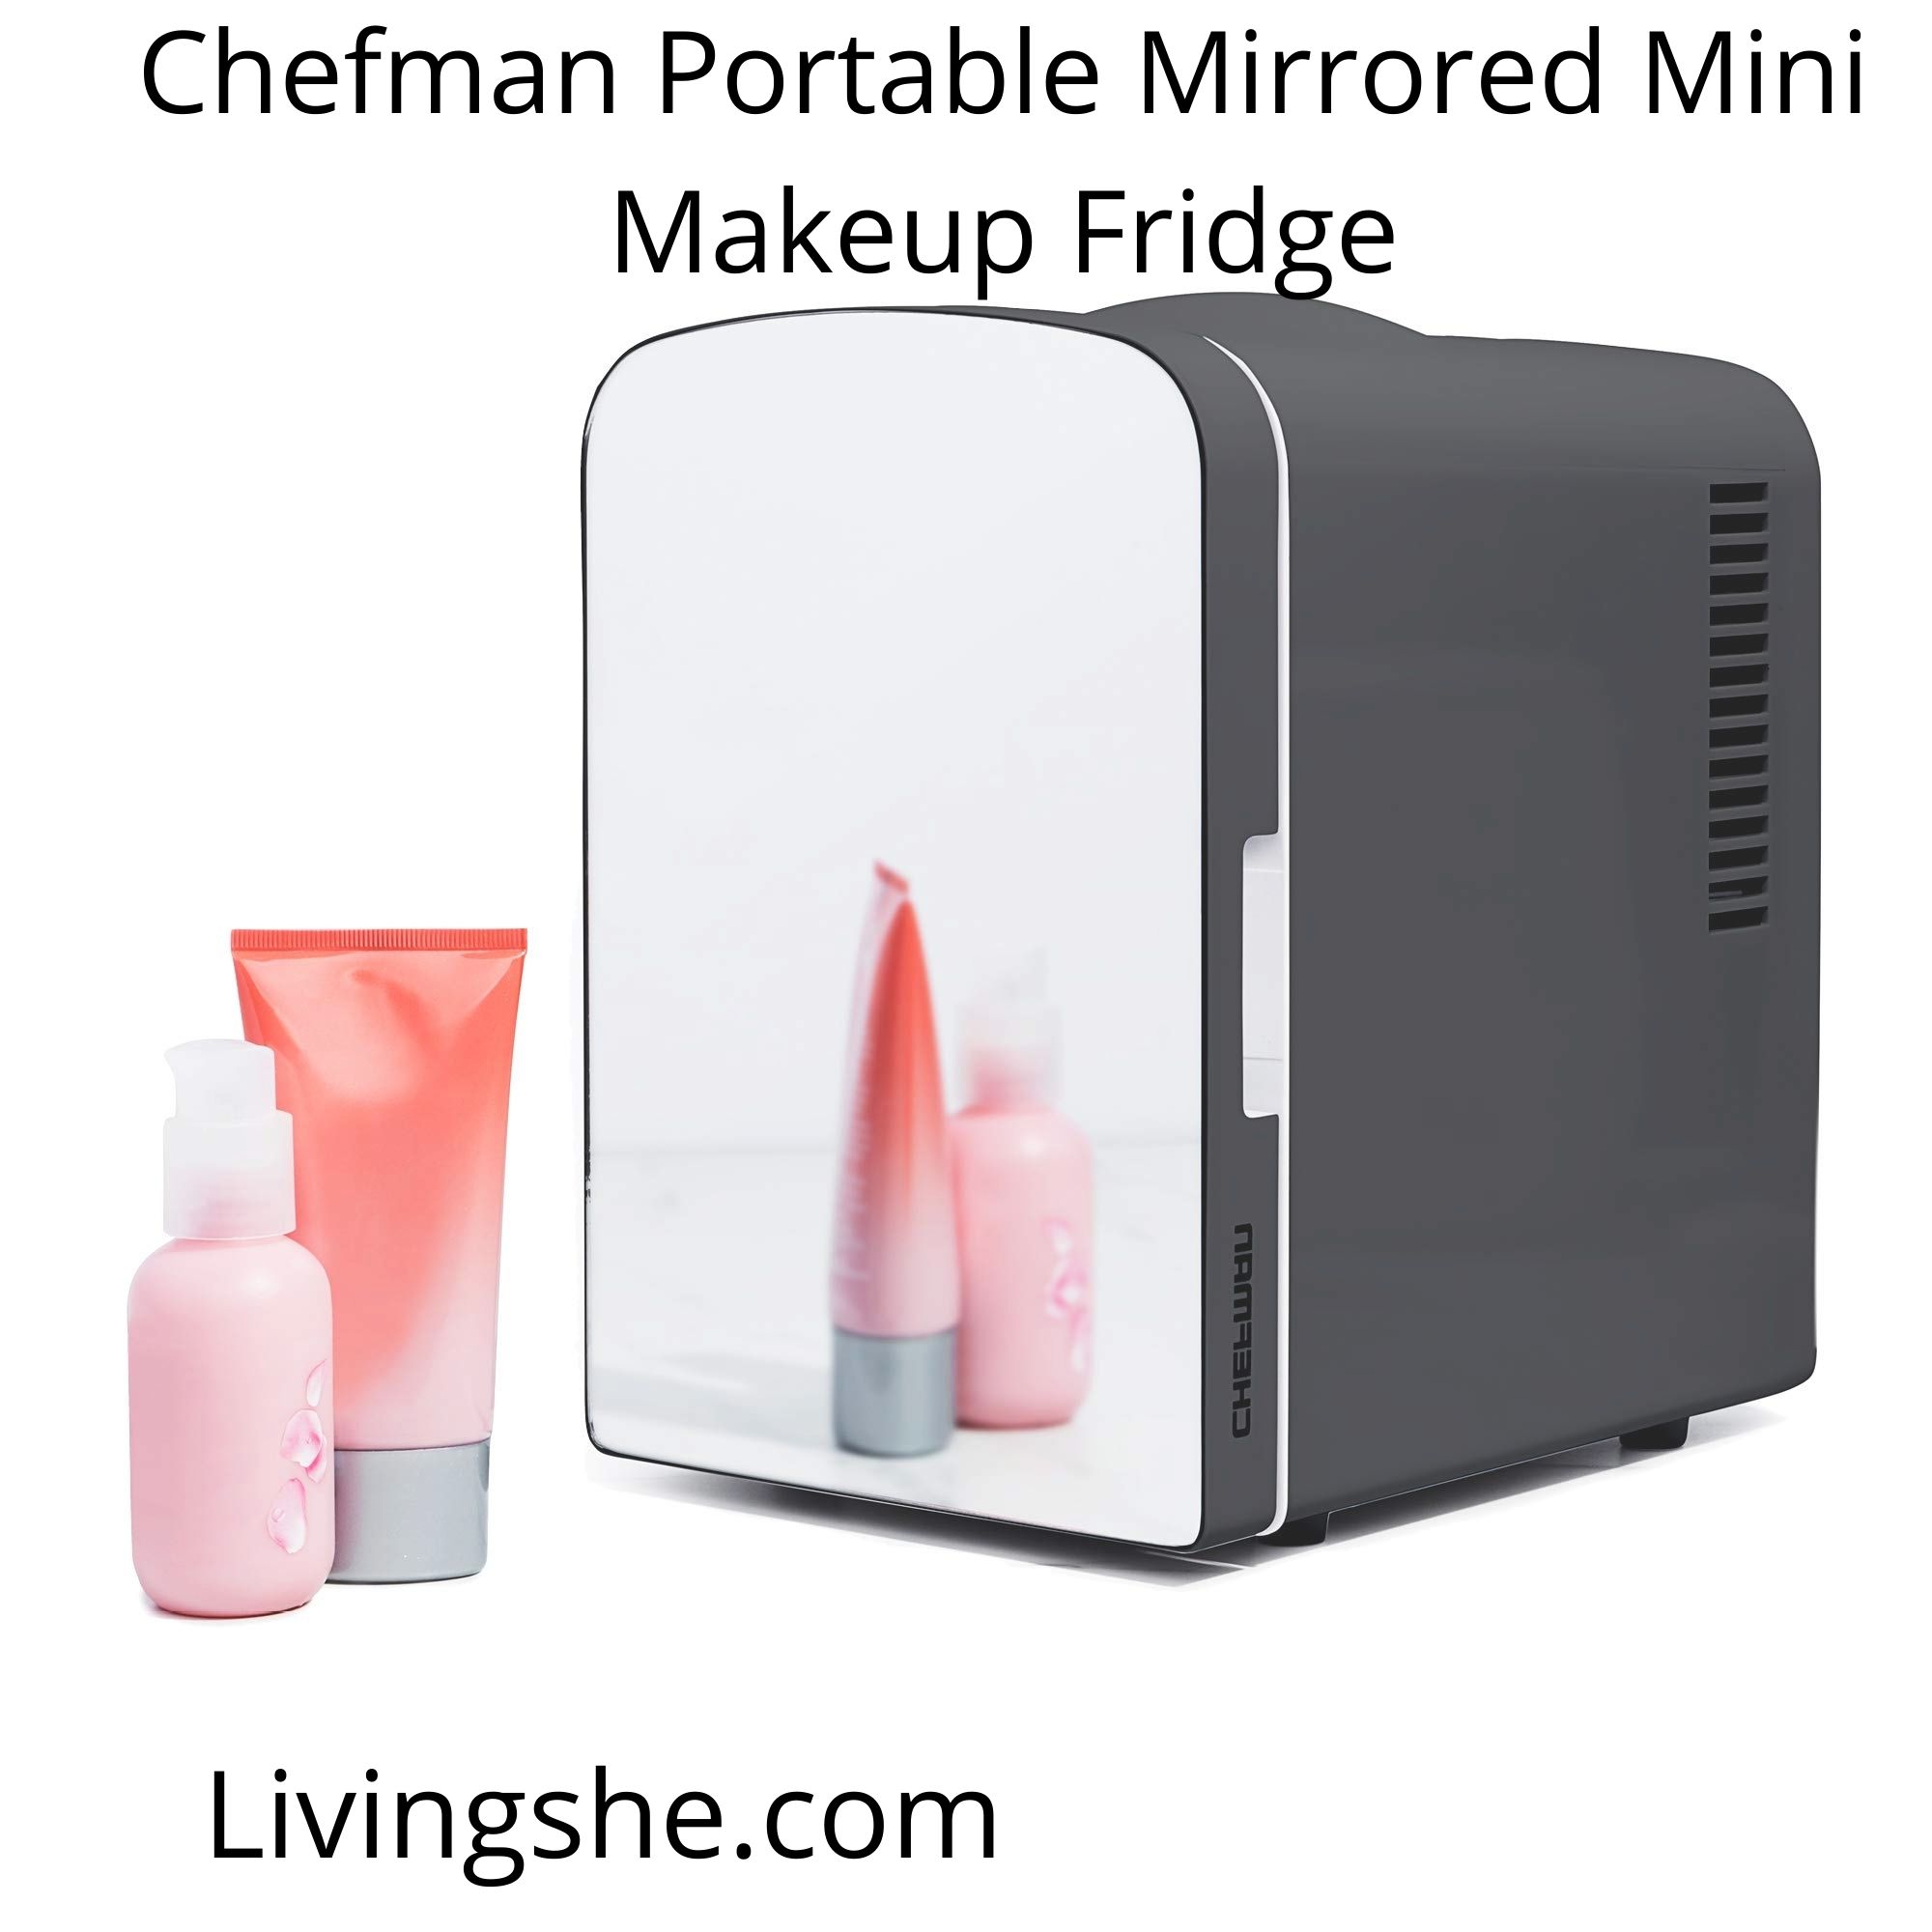 Chefman Portable Mirrored Mini Makeup Fridge - Review